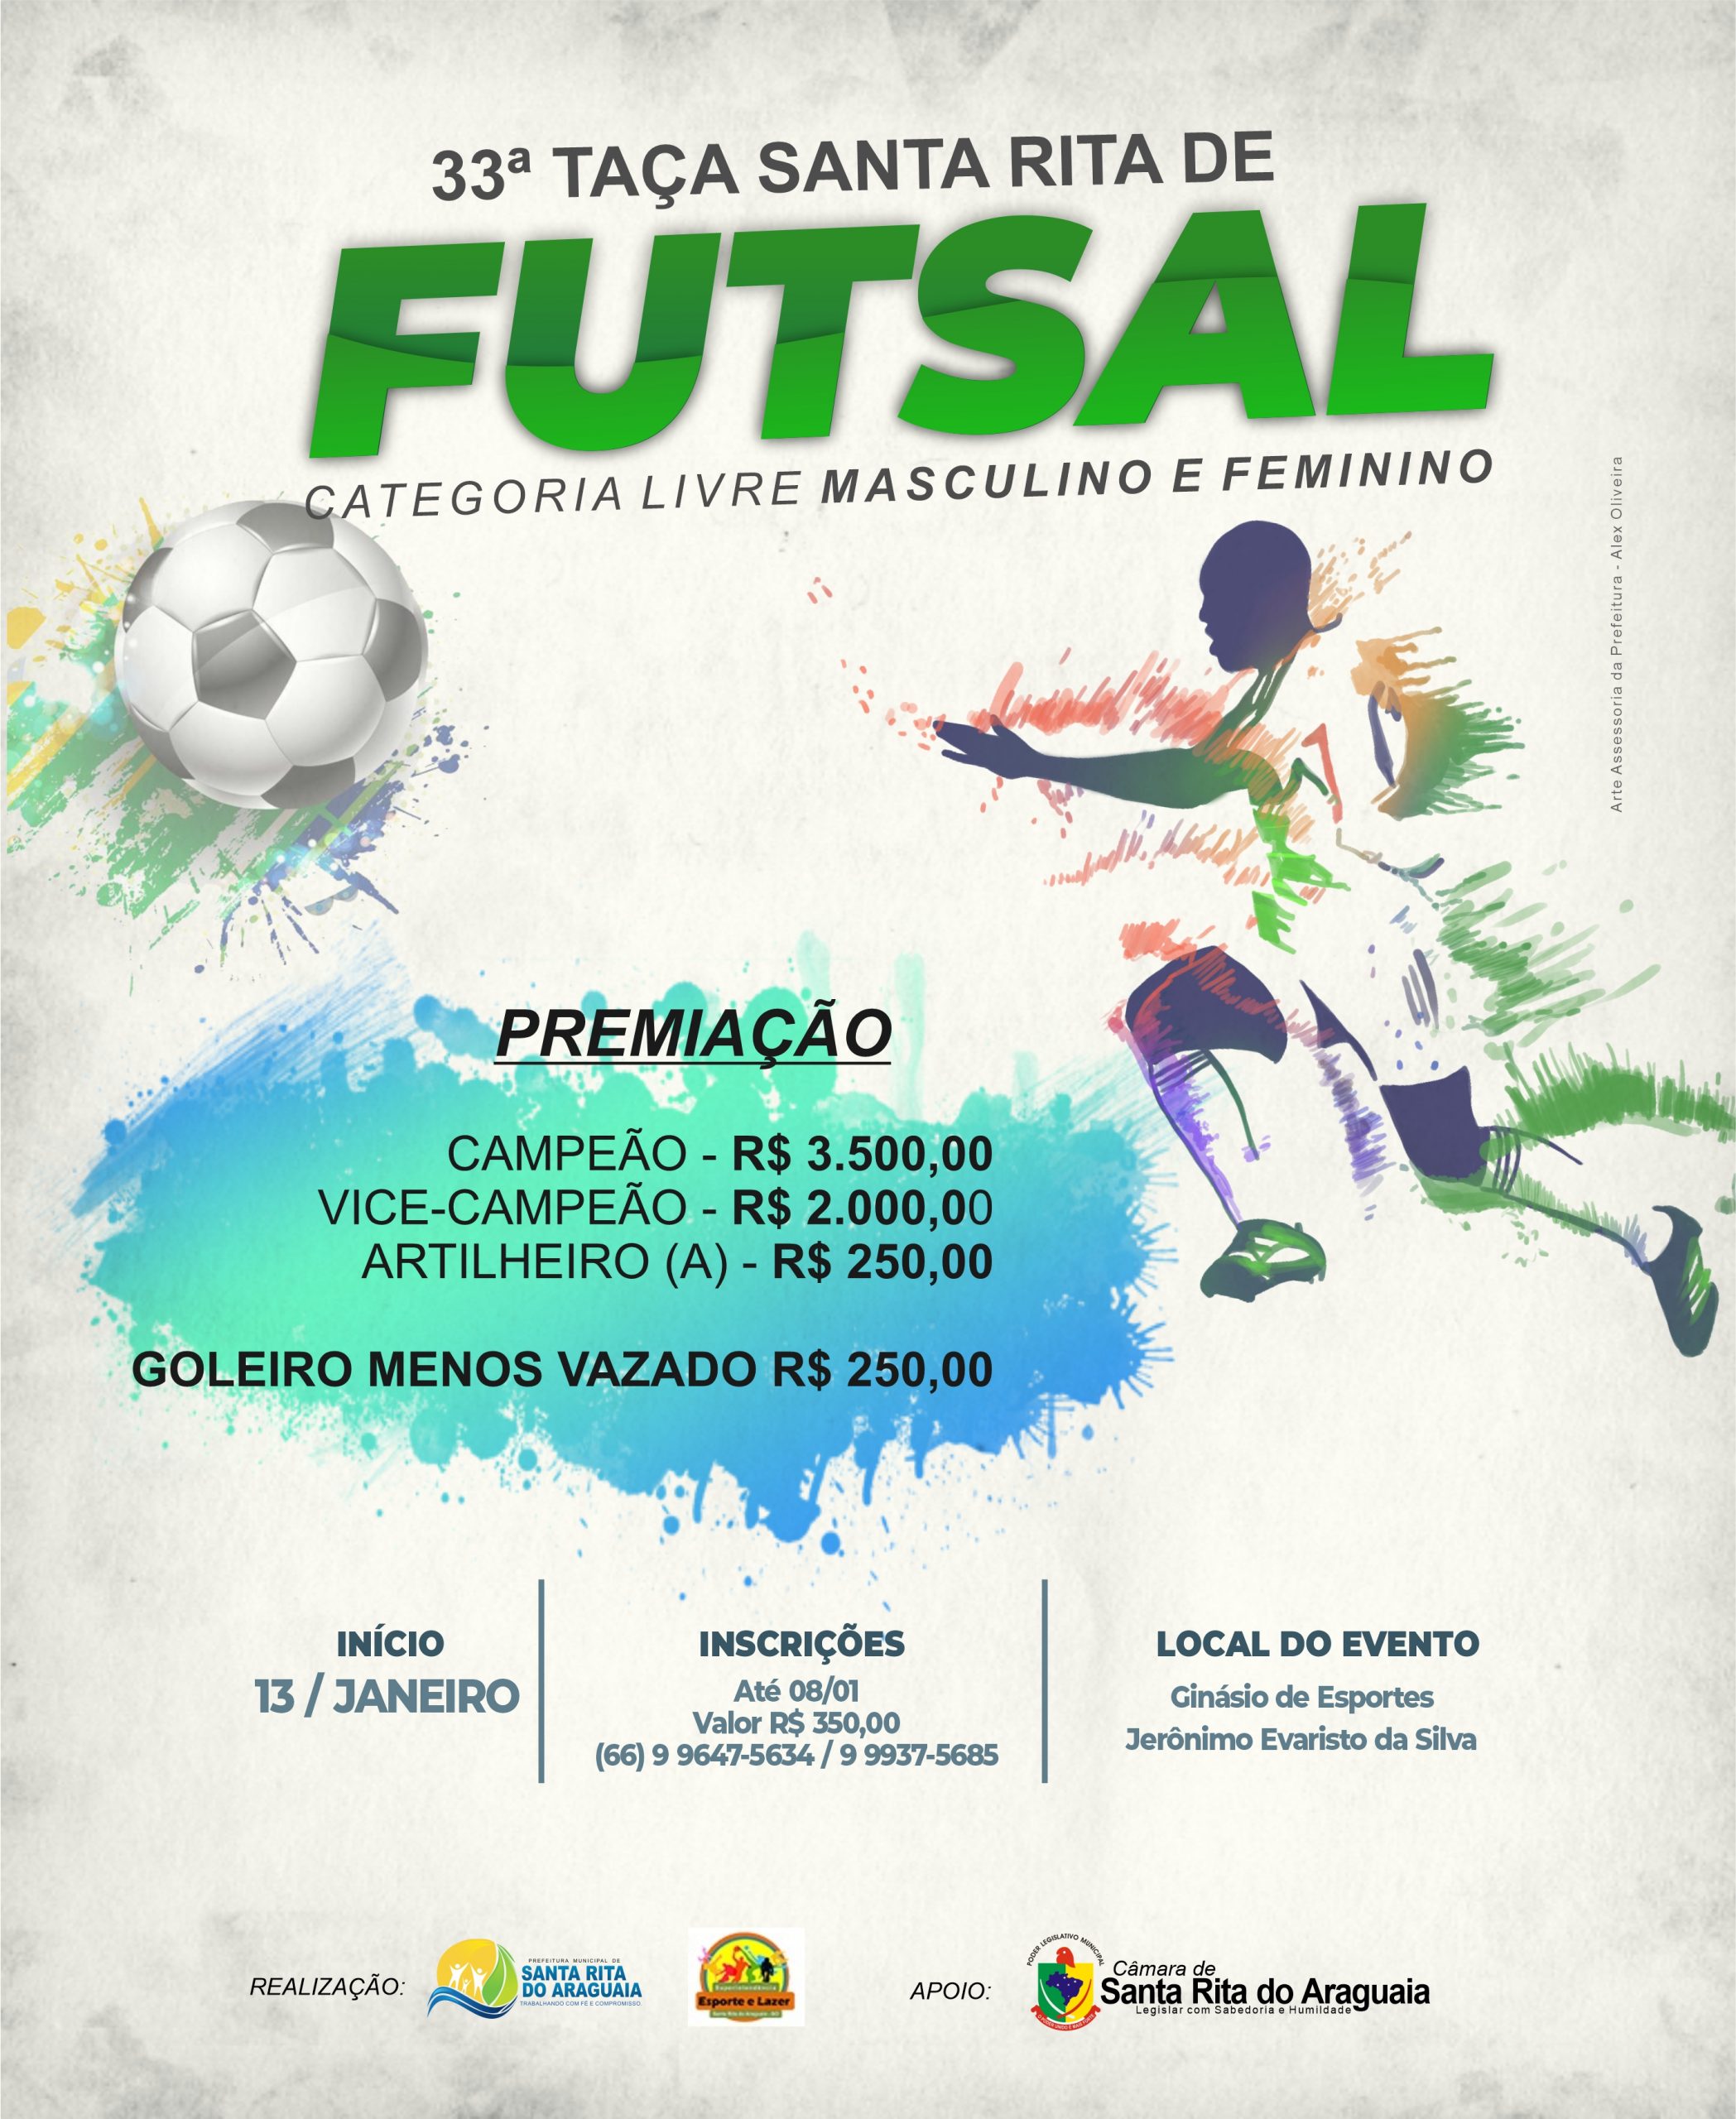 Abertas as inscrições para a 33.ª Taça Santa Rita de Futsal